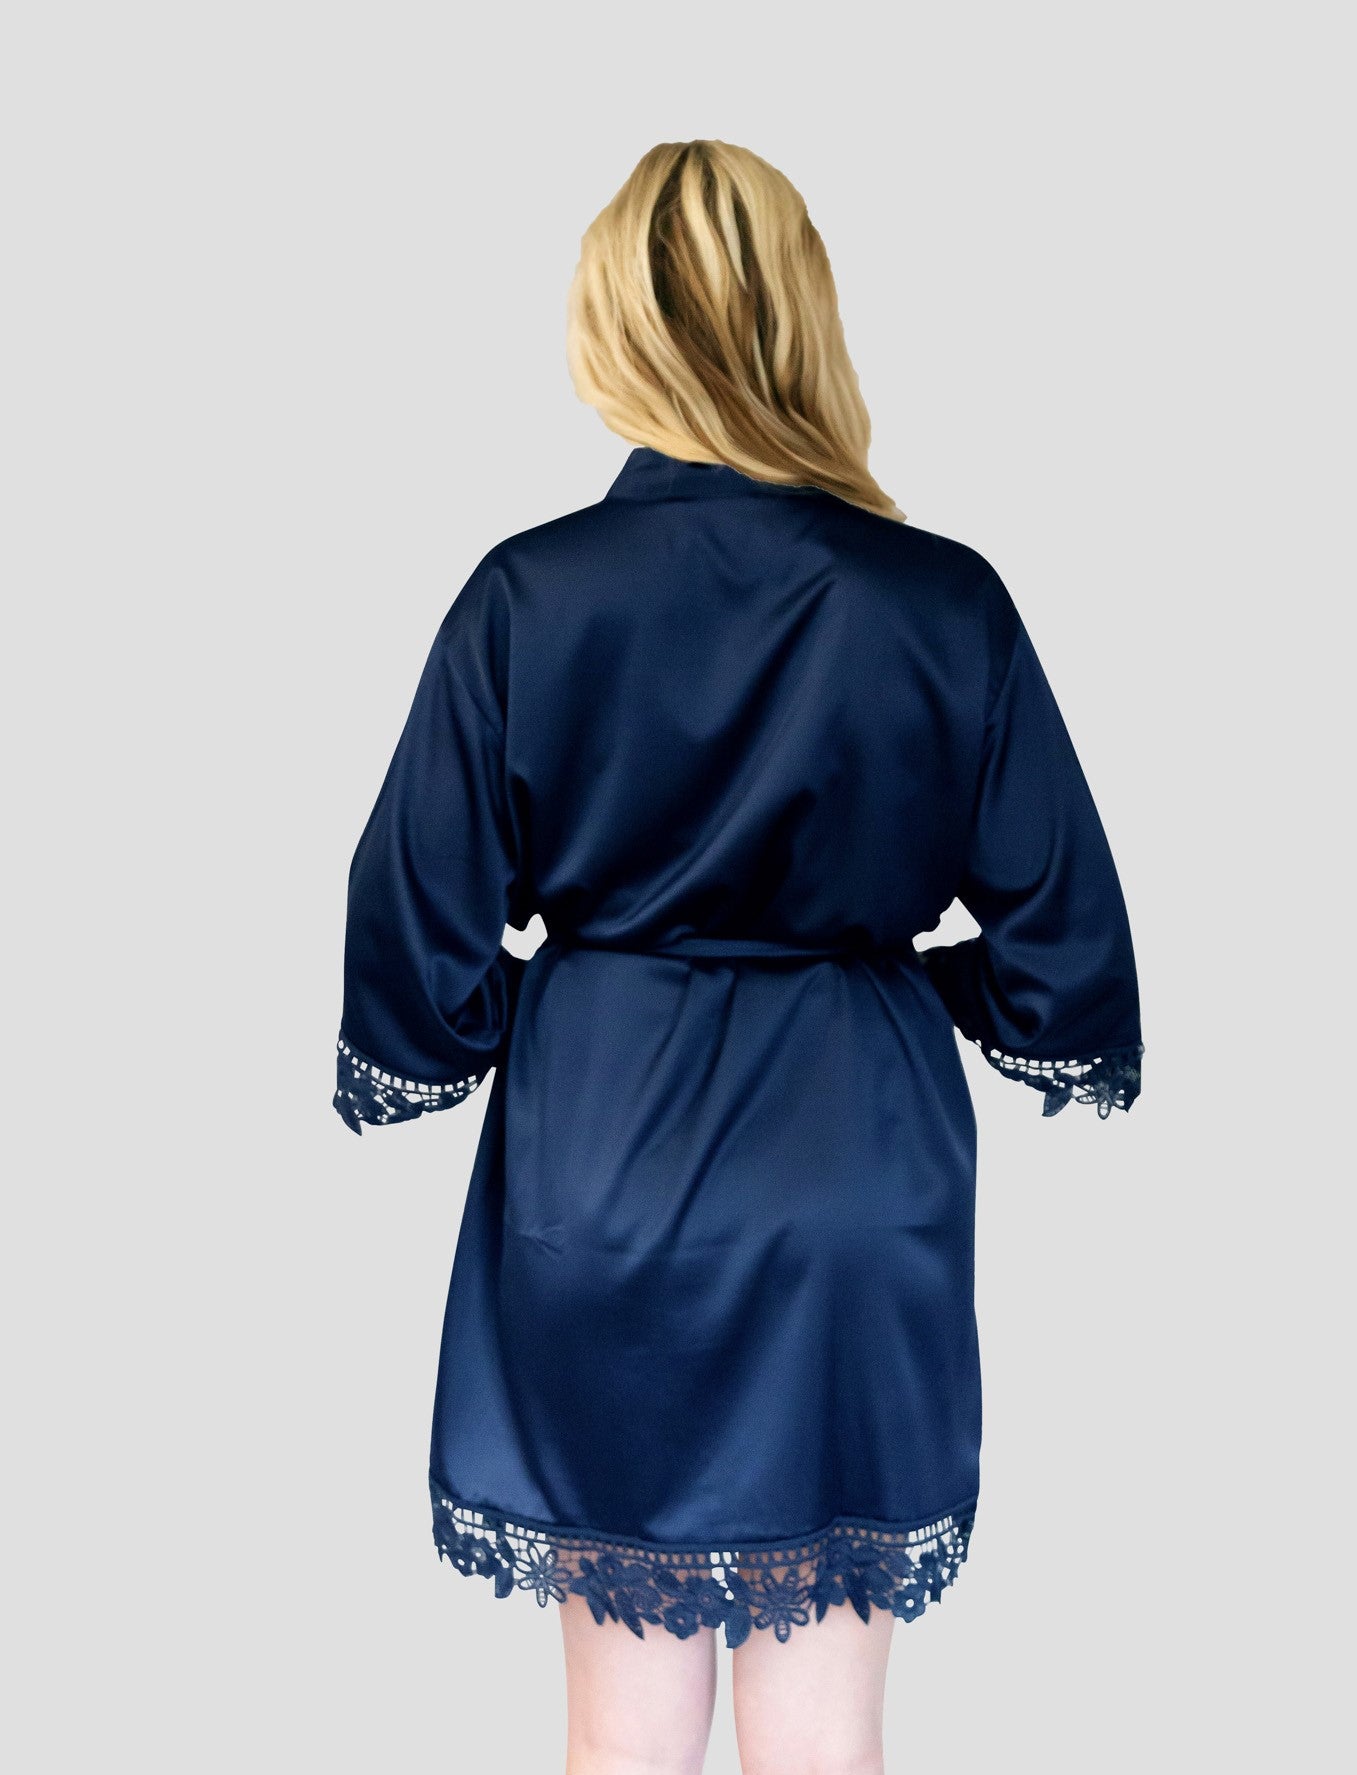 Shop Online Navy Blue Satin Robes for Bride & Bridesmaids